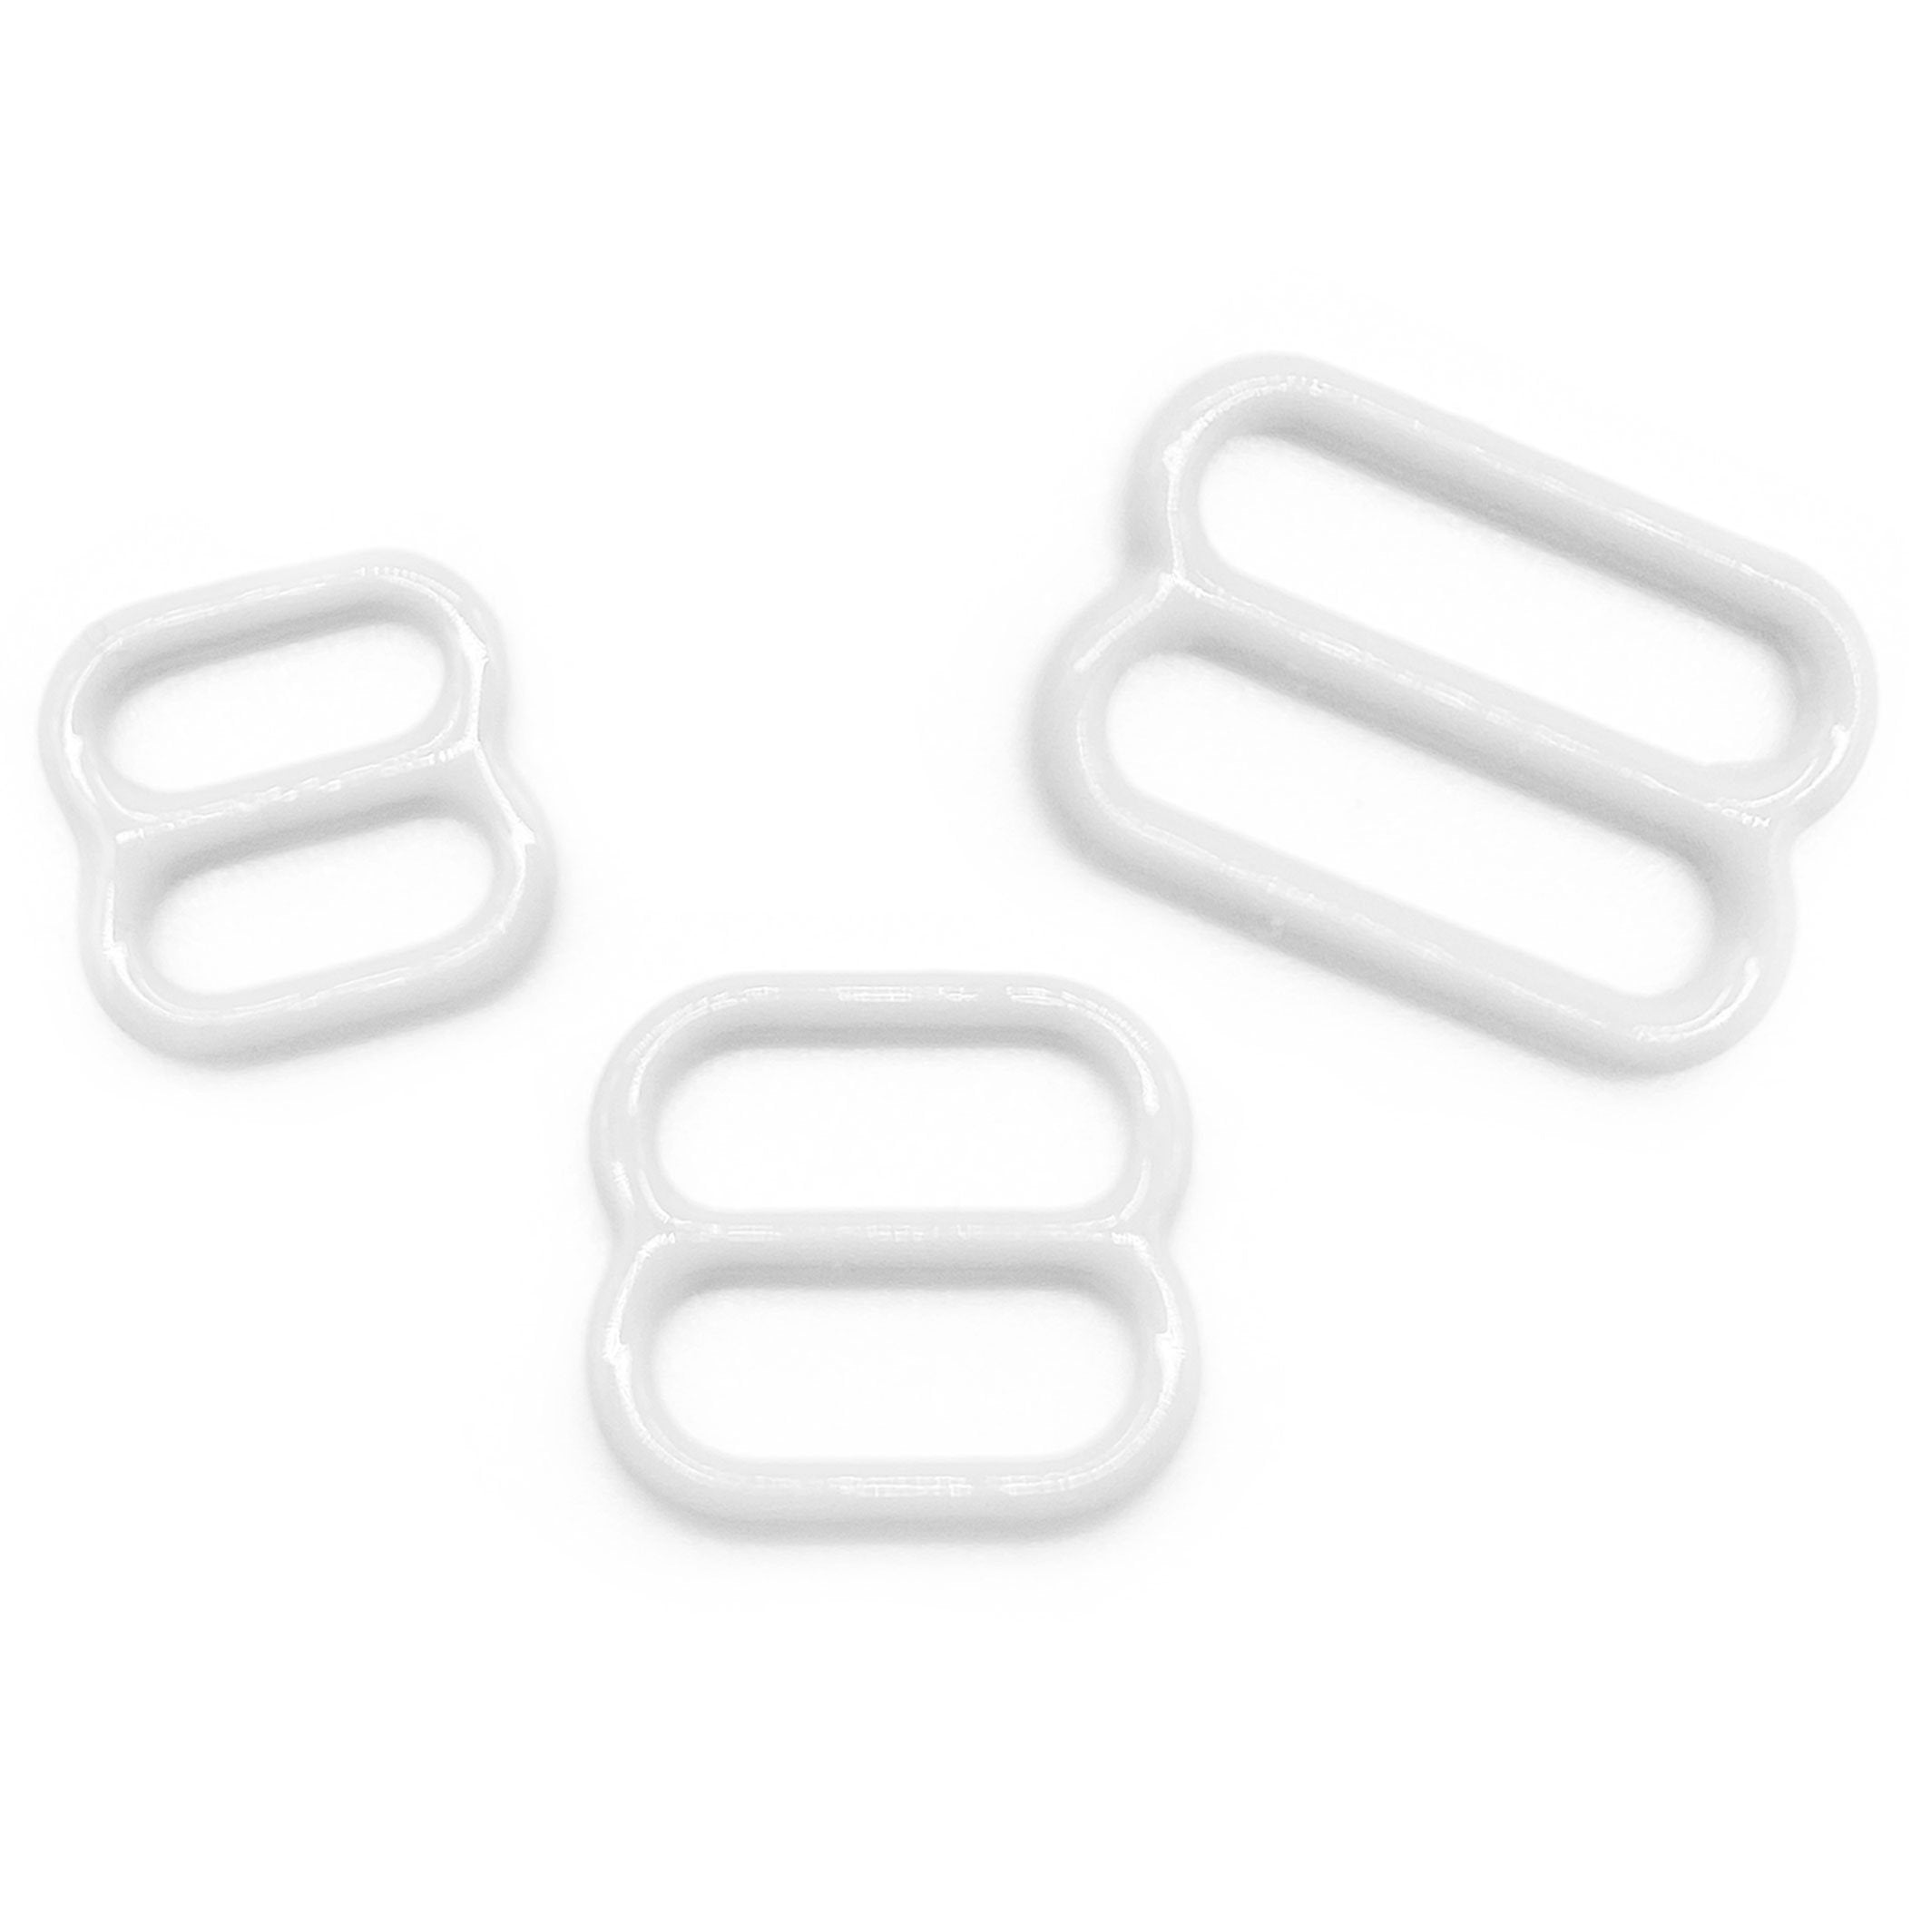 CLEARANCE- 5 Pair of Rings OR Sliders White Enamel for Bra making or Swimwear - 1/4"/6mm, 3/8"/10mm, 1/2"/12mm - Stitch Love Studio